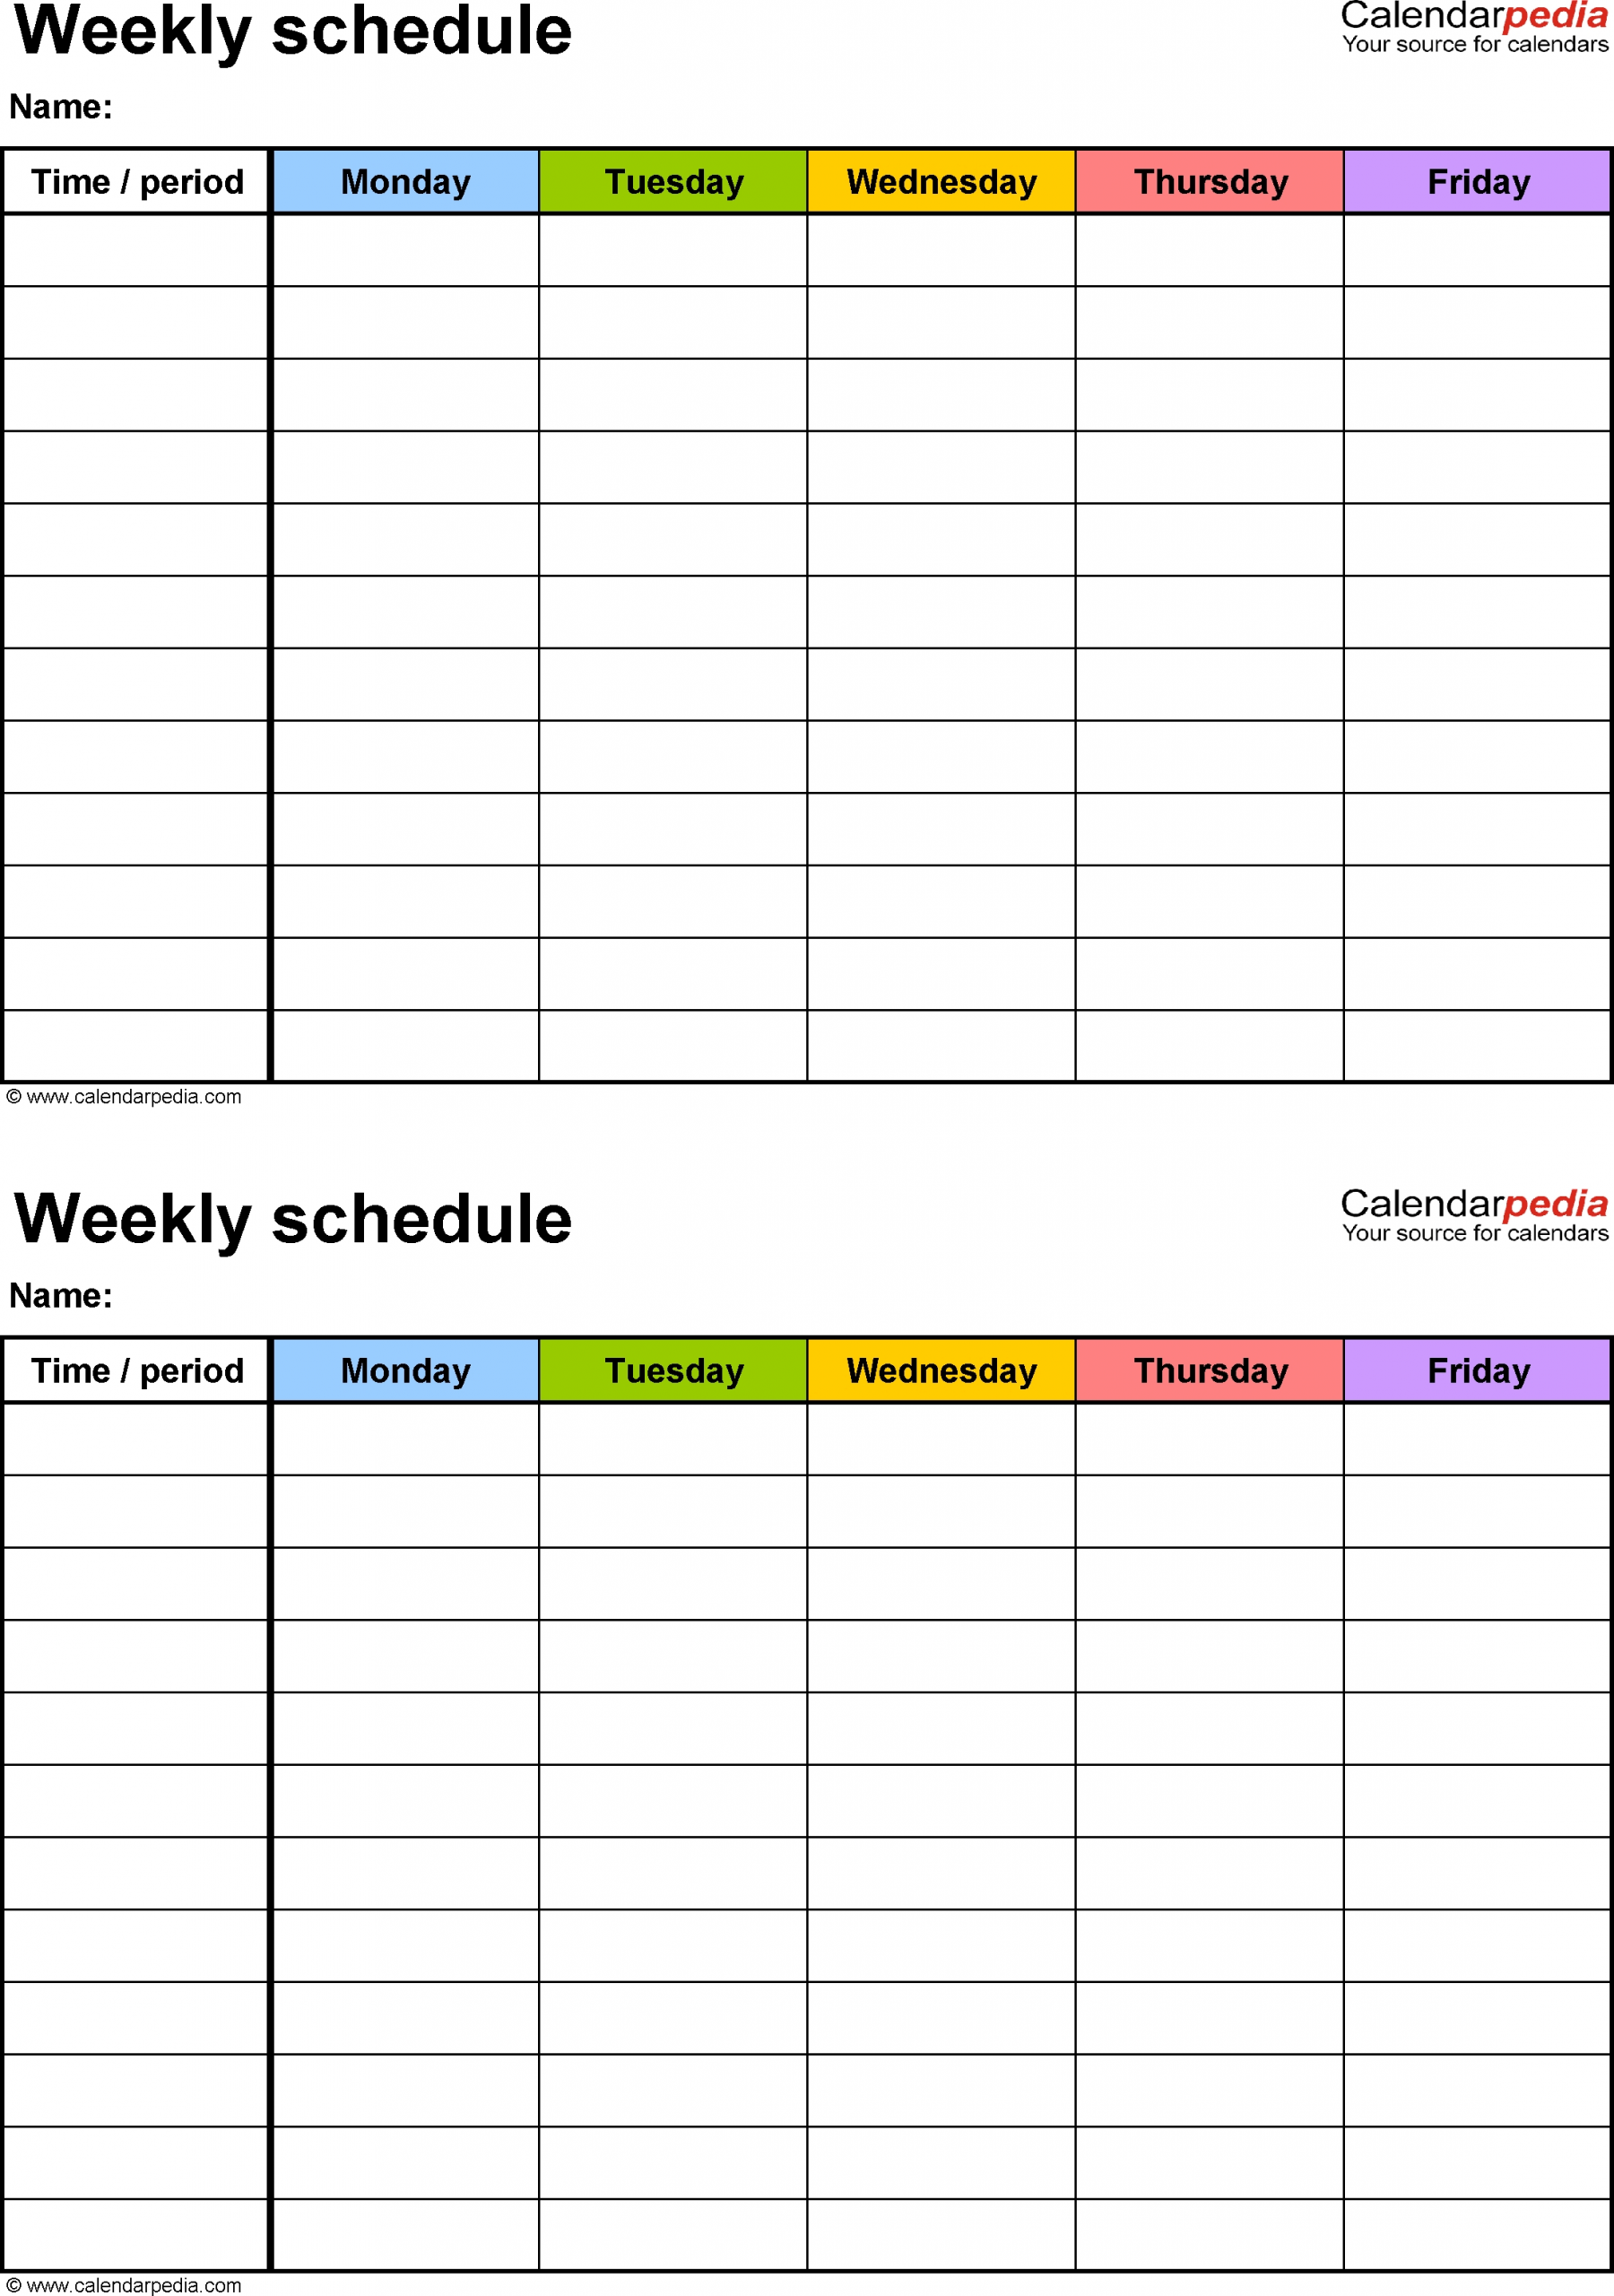 November 2018 - Page 3 - Template Calendar Design 3 Week Calendar Printable